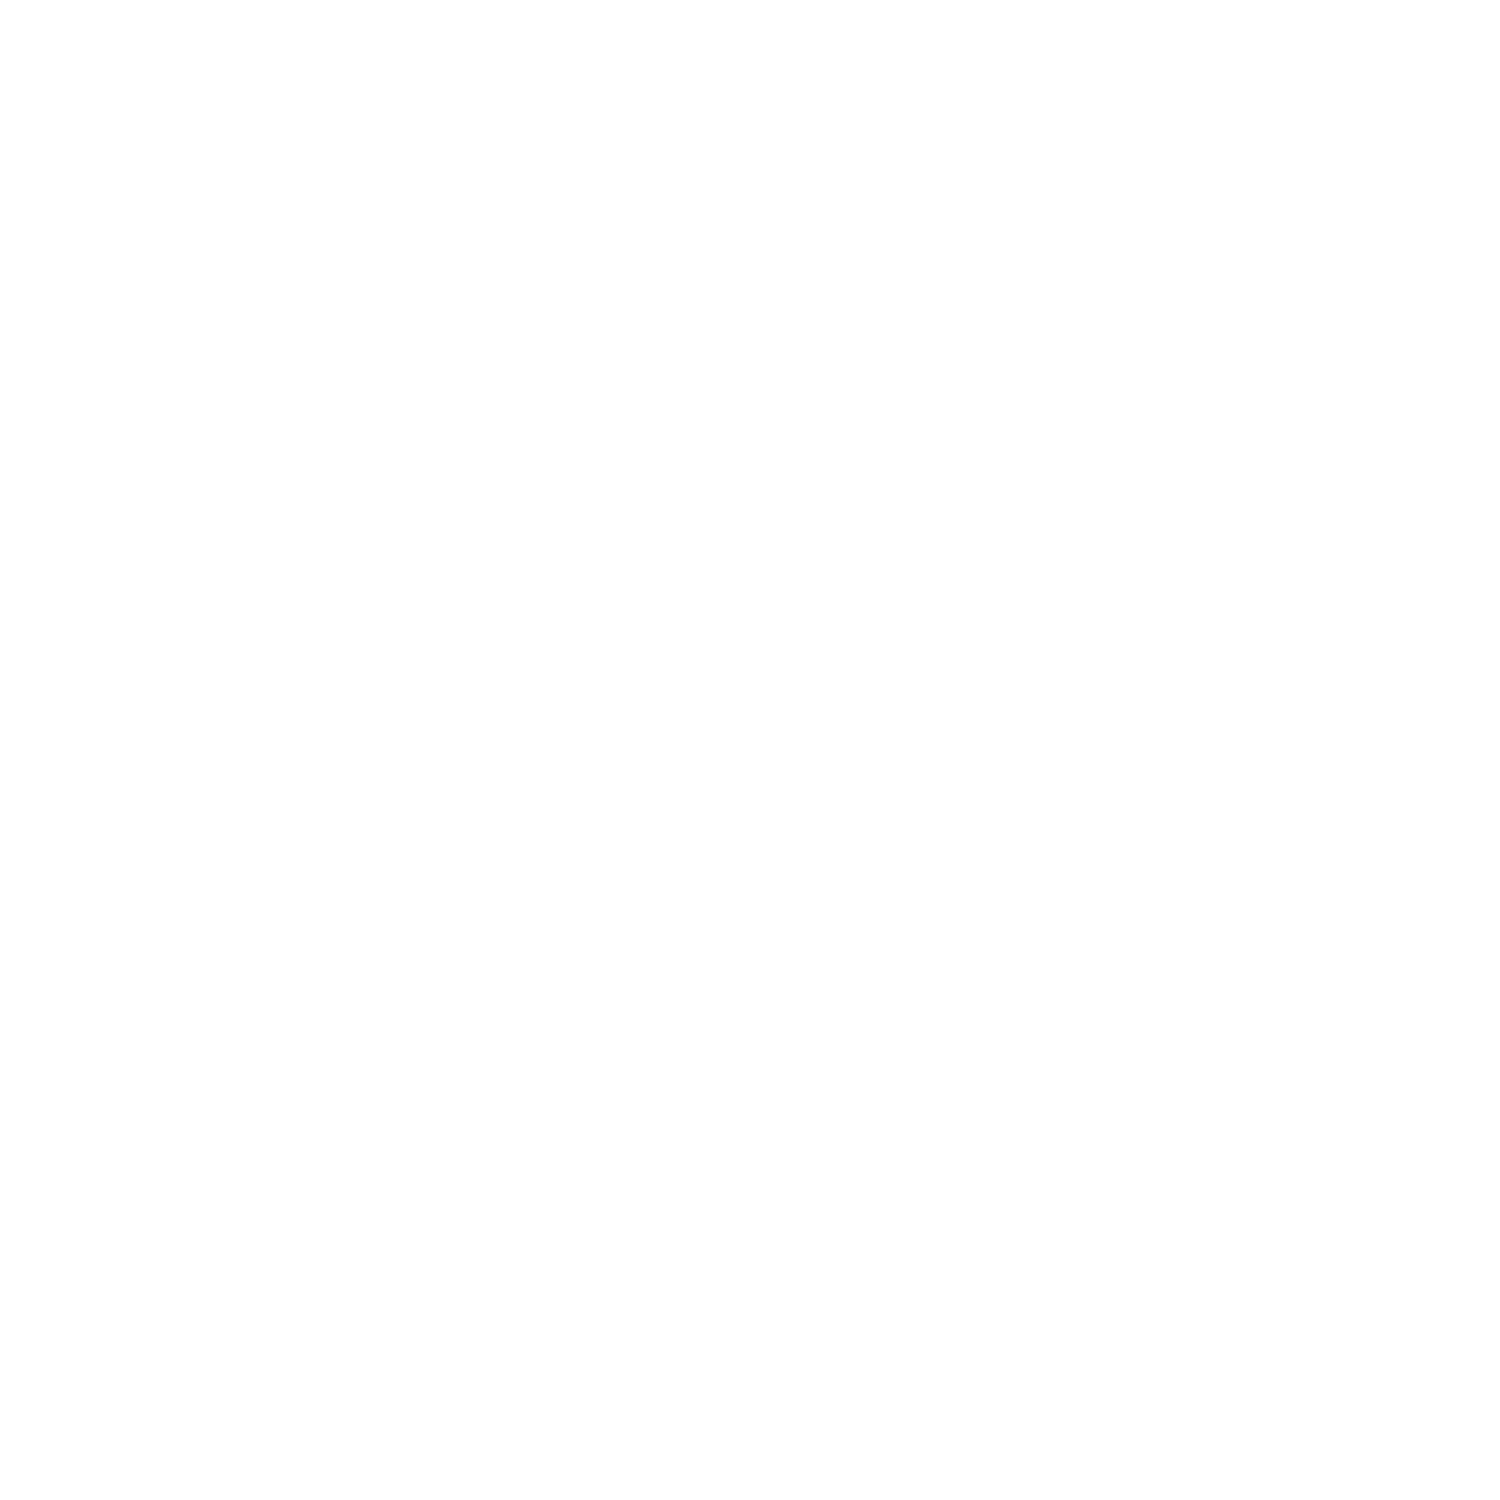 Palladium Garland Senior Living